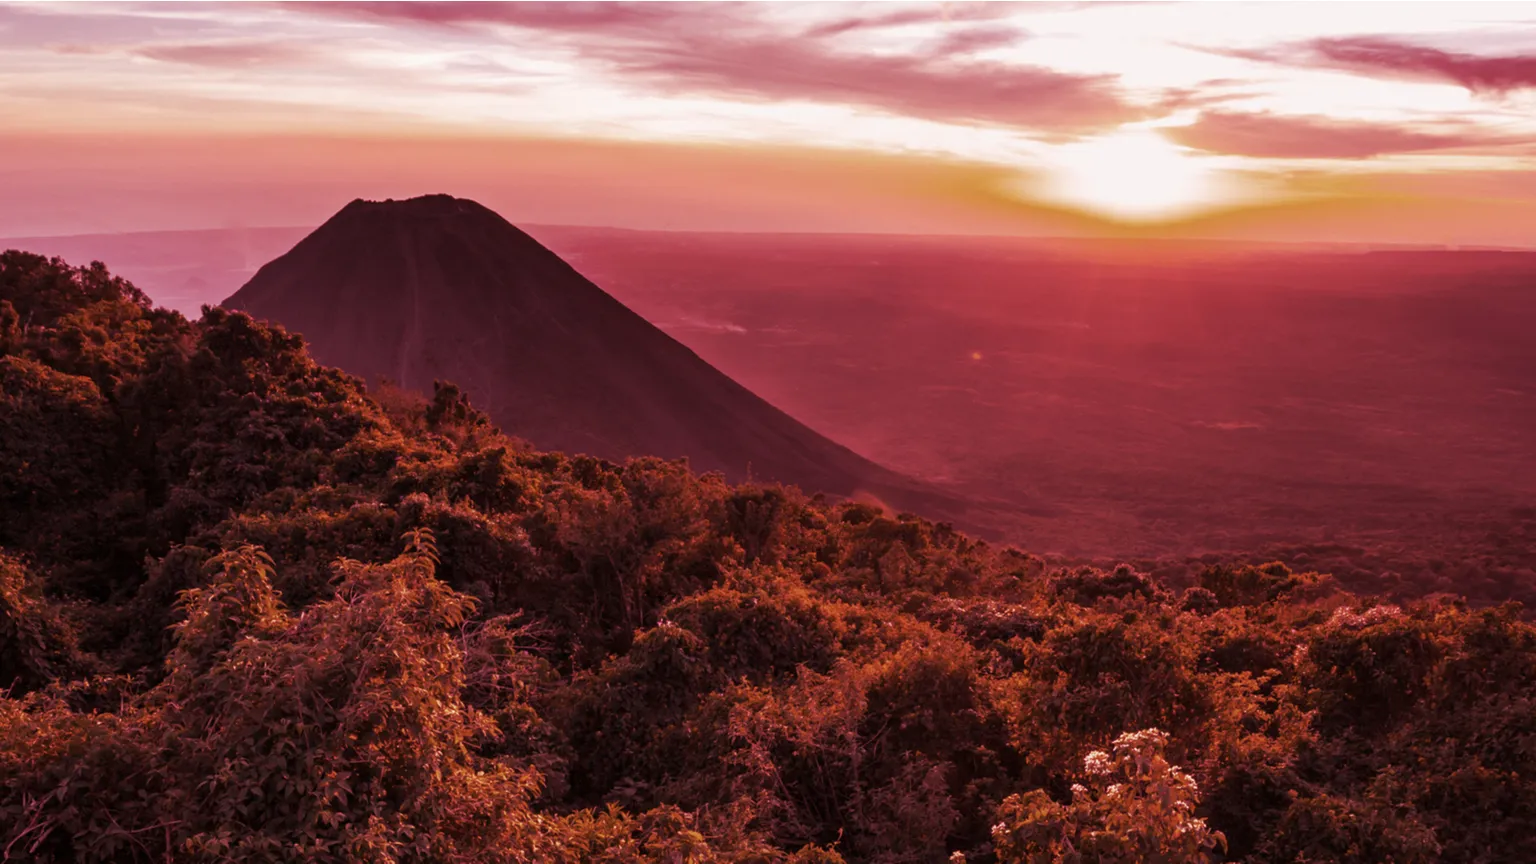 A volcano in El Salvador's Cerro Verde National Park. Image: Shutterstock